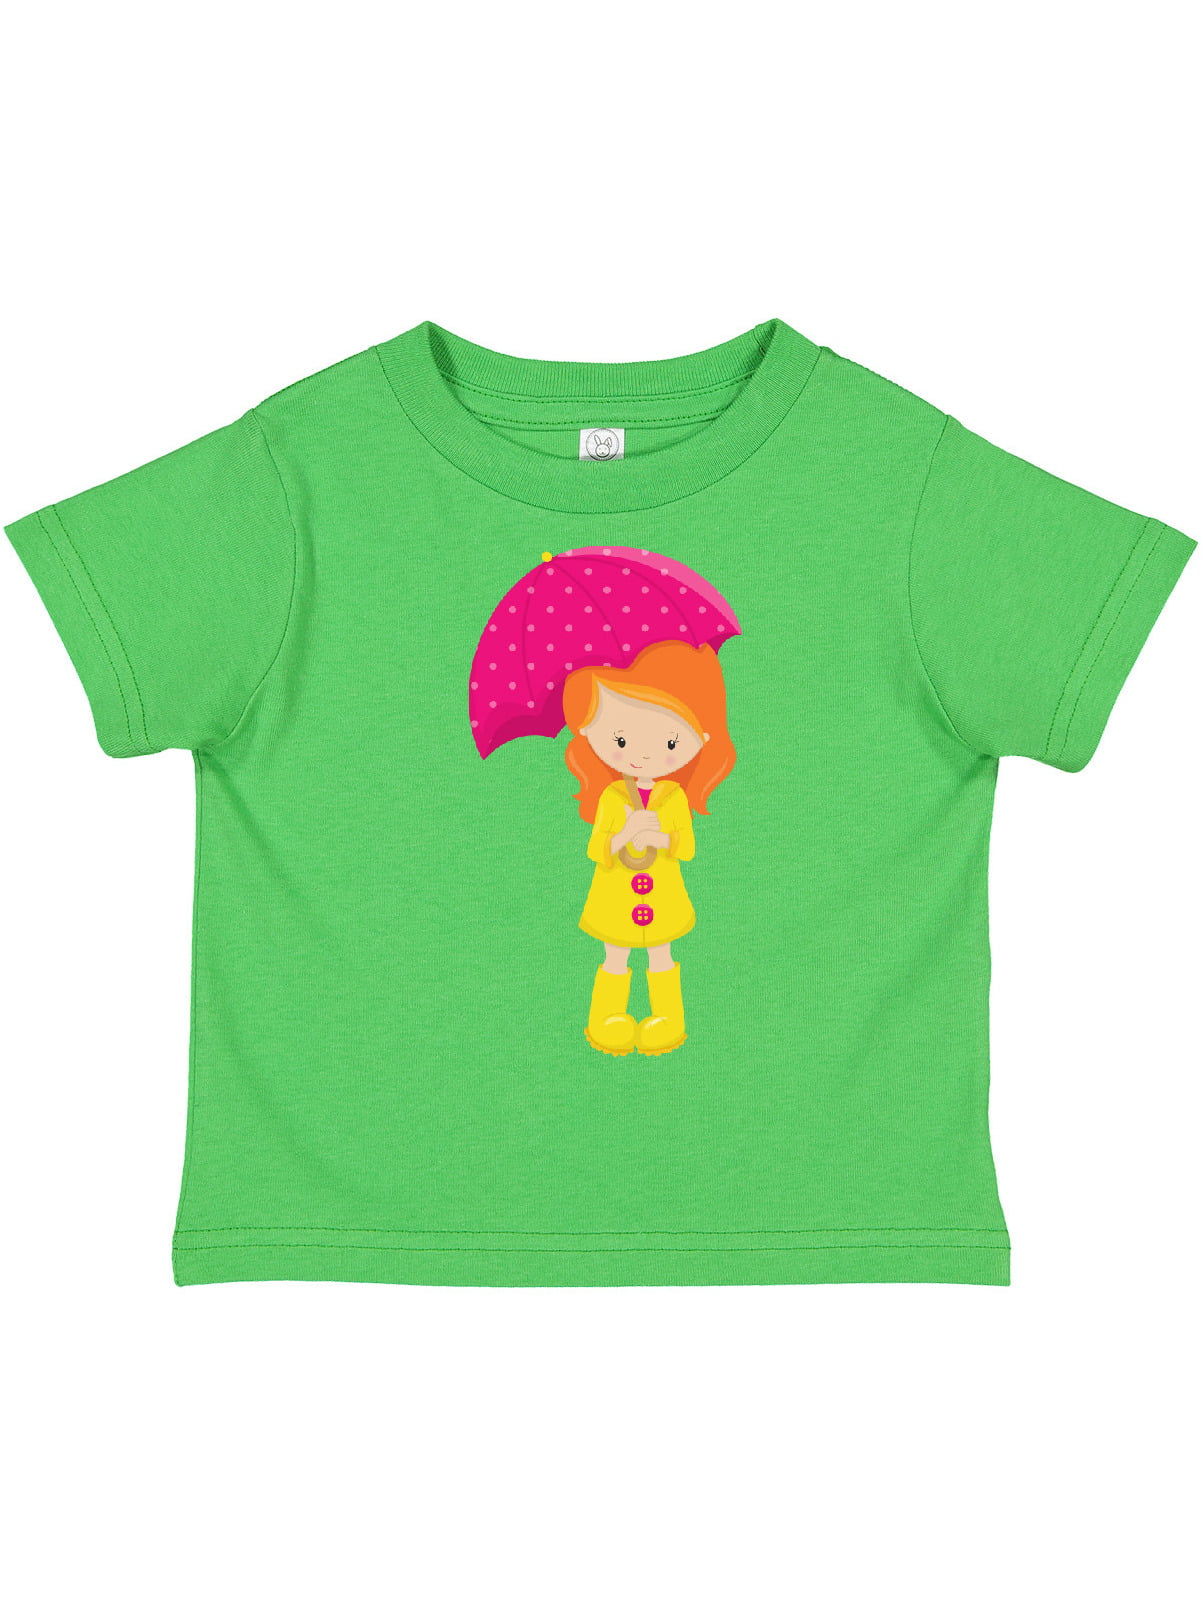 Strawberry Shortcake Pink Short Sleeve Toddler Girls T-shirt  Size 2T  Clearance 